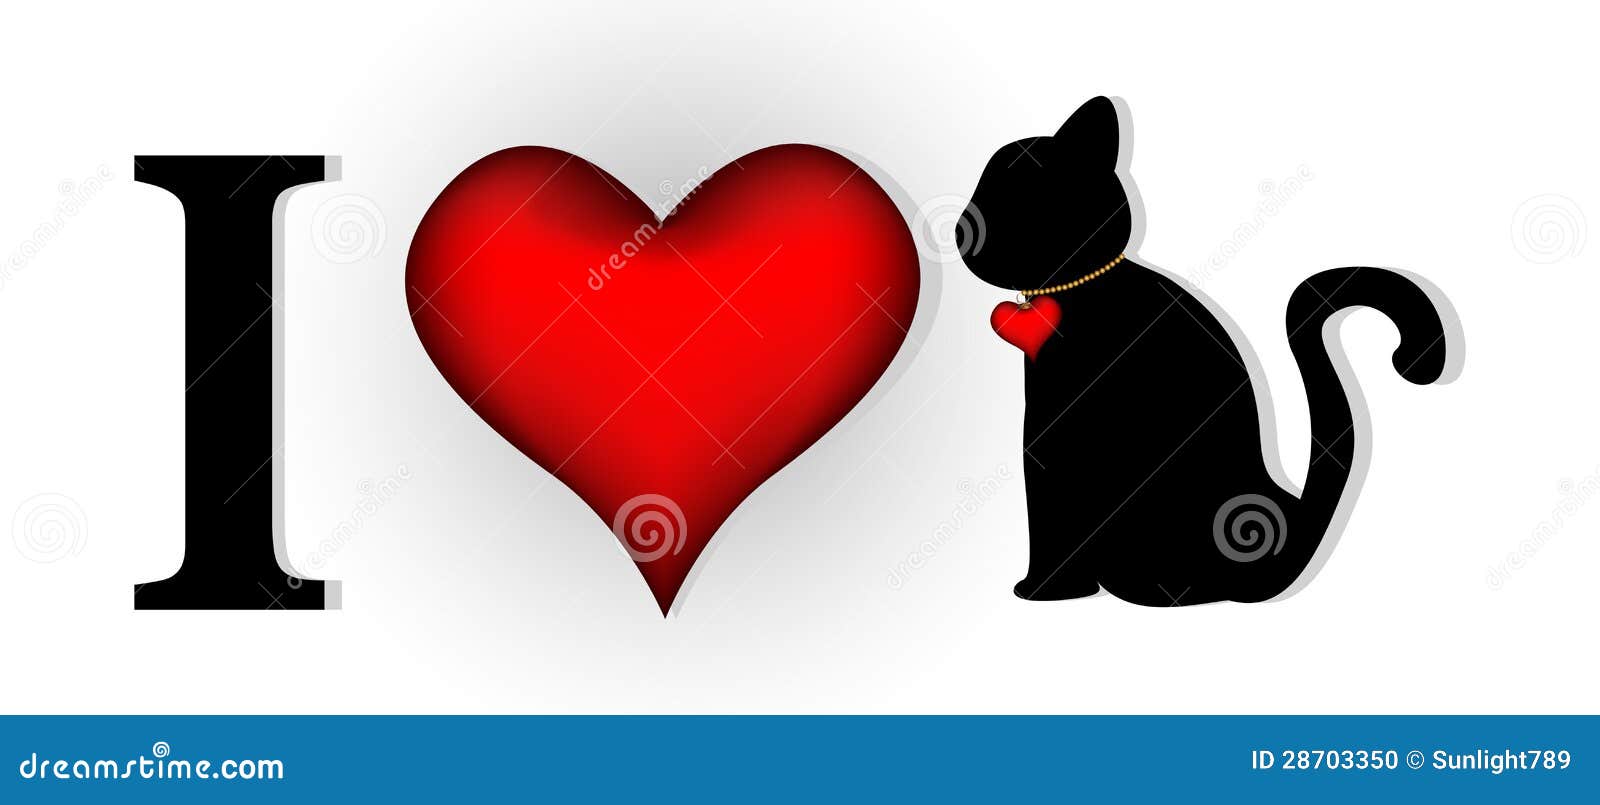 I love cat for you design stock illustration. Illustration of black ...